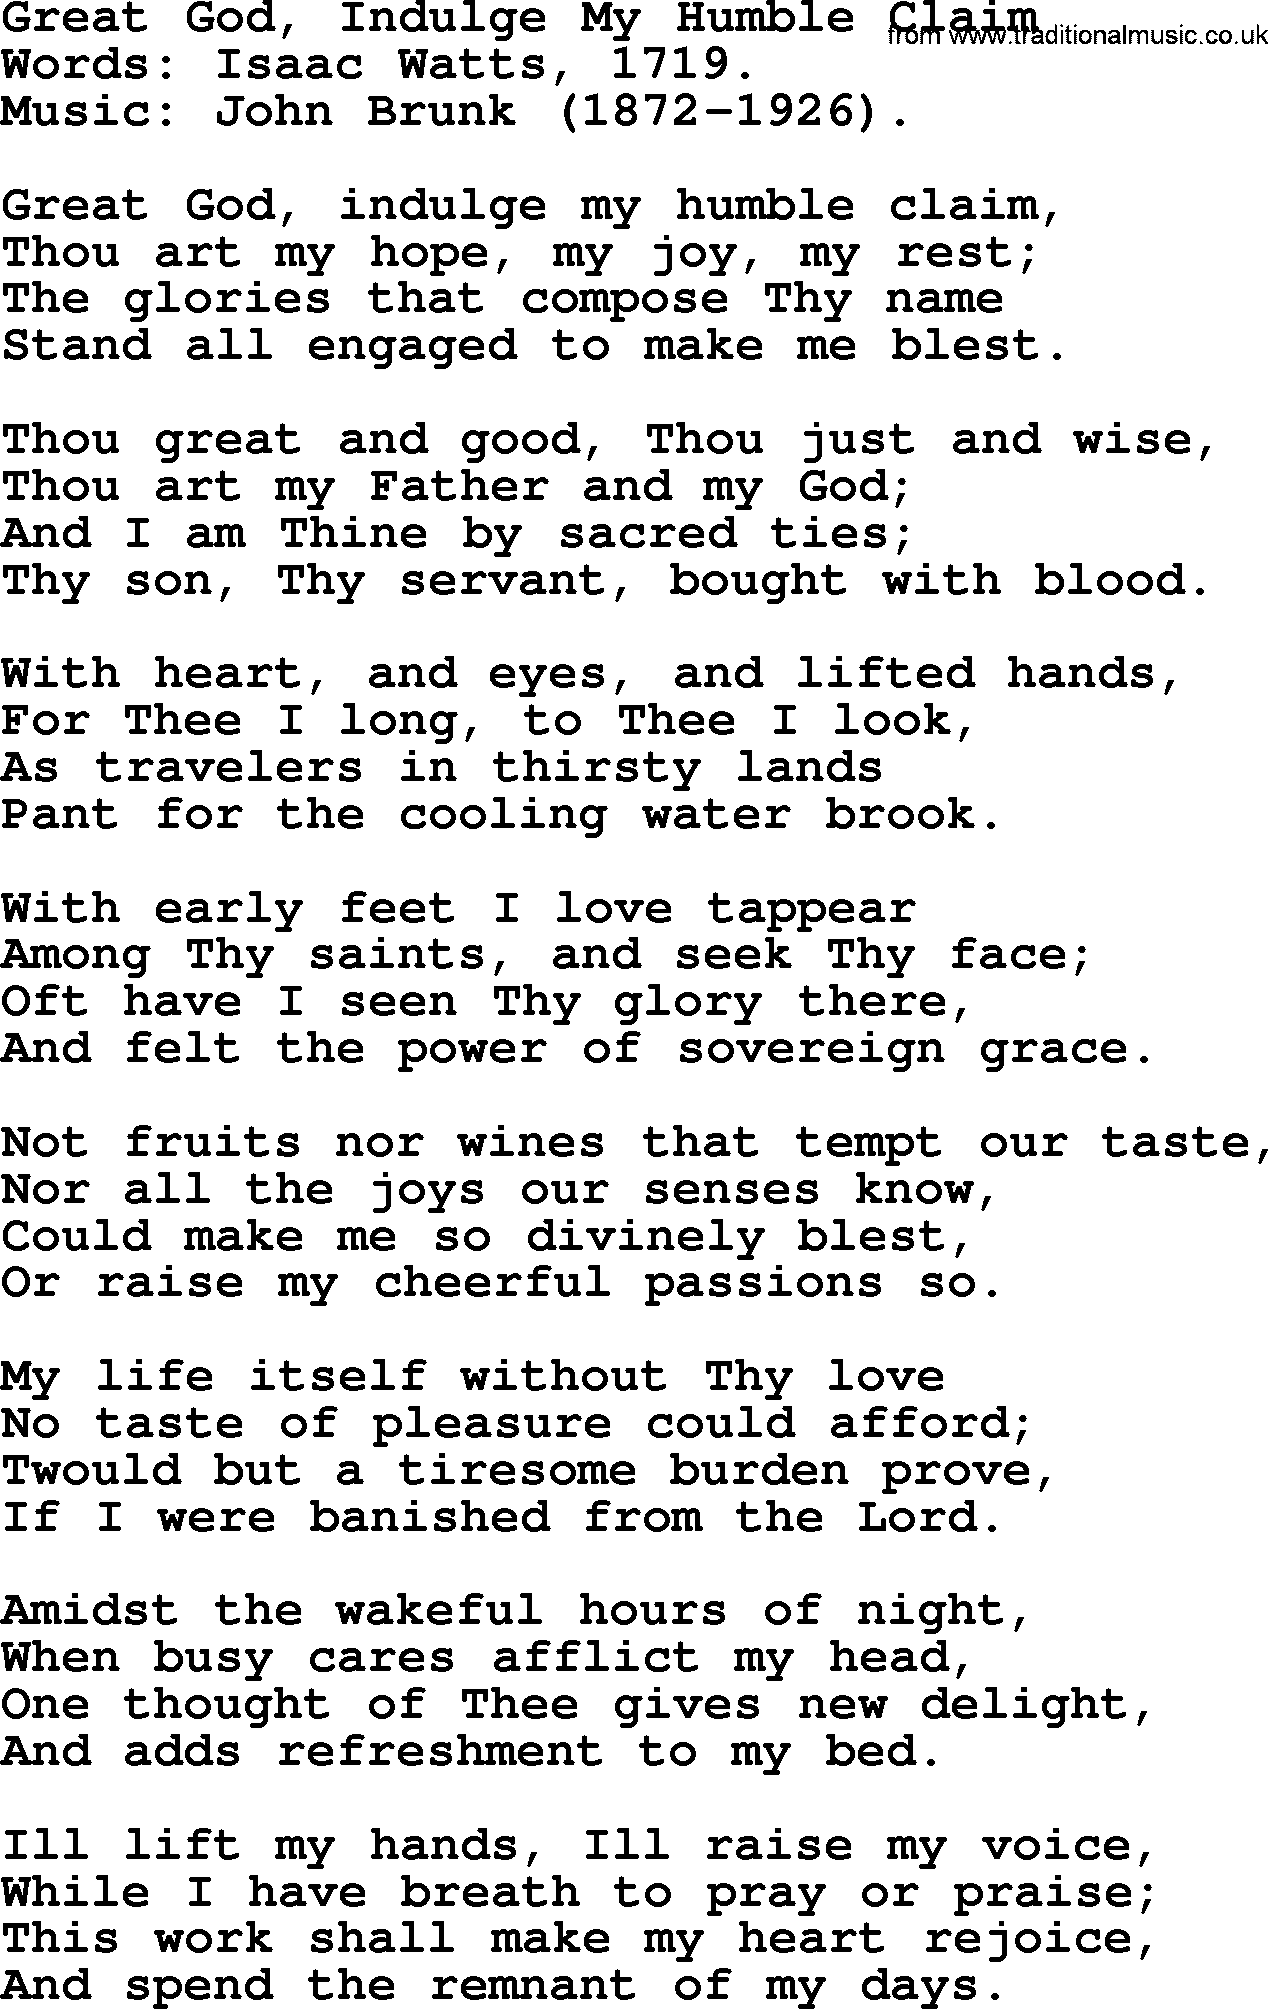 Isaac Watts Christian hymn: Great God, Indulge My Humble Claim- lyricss